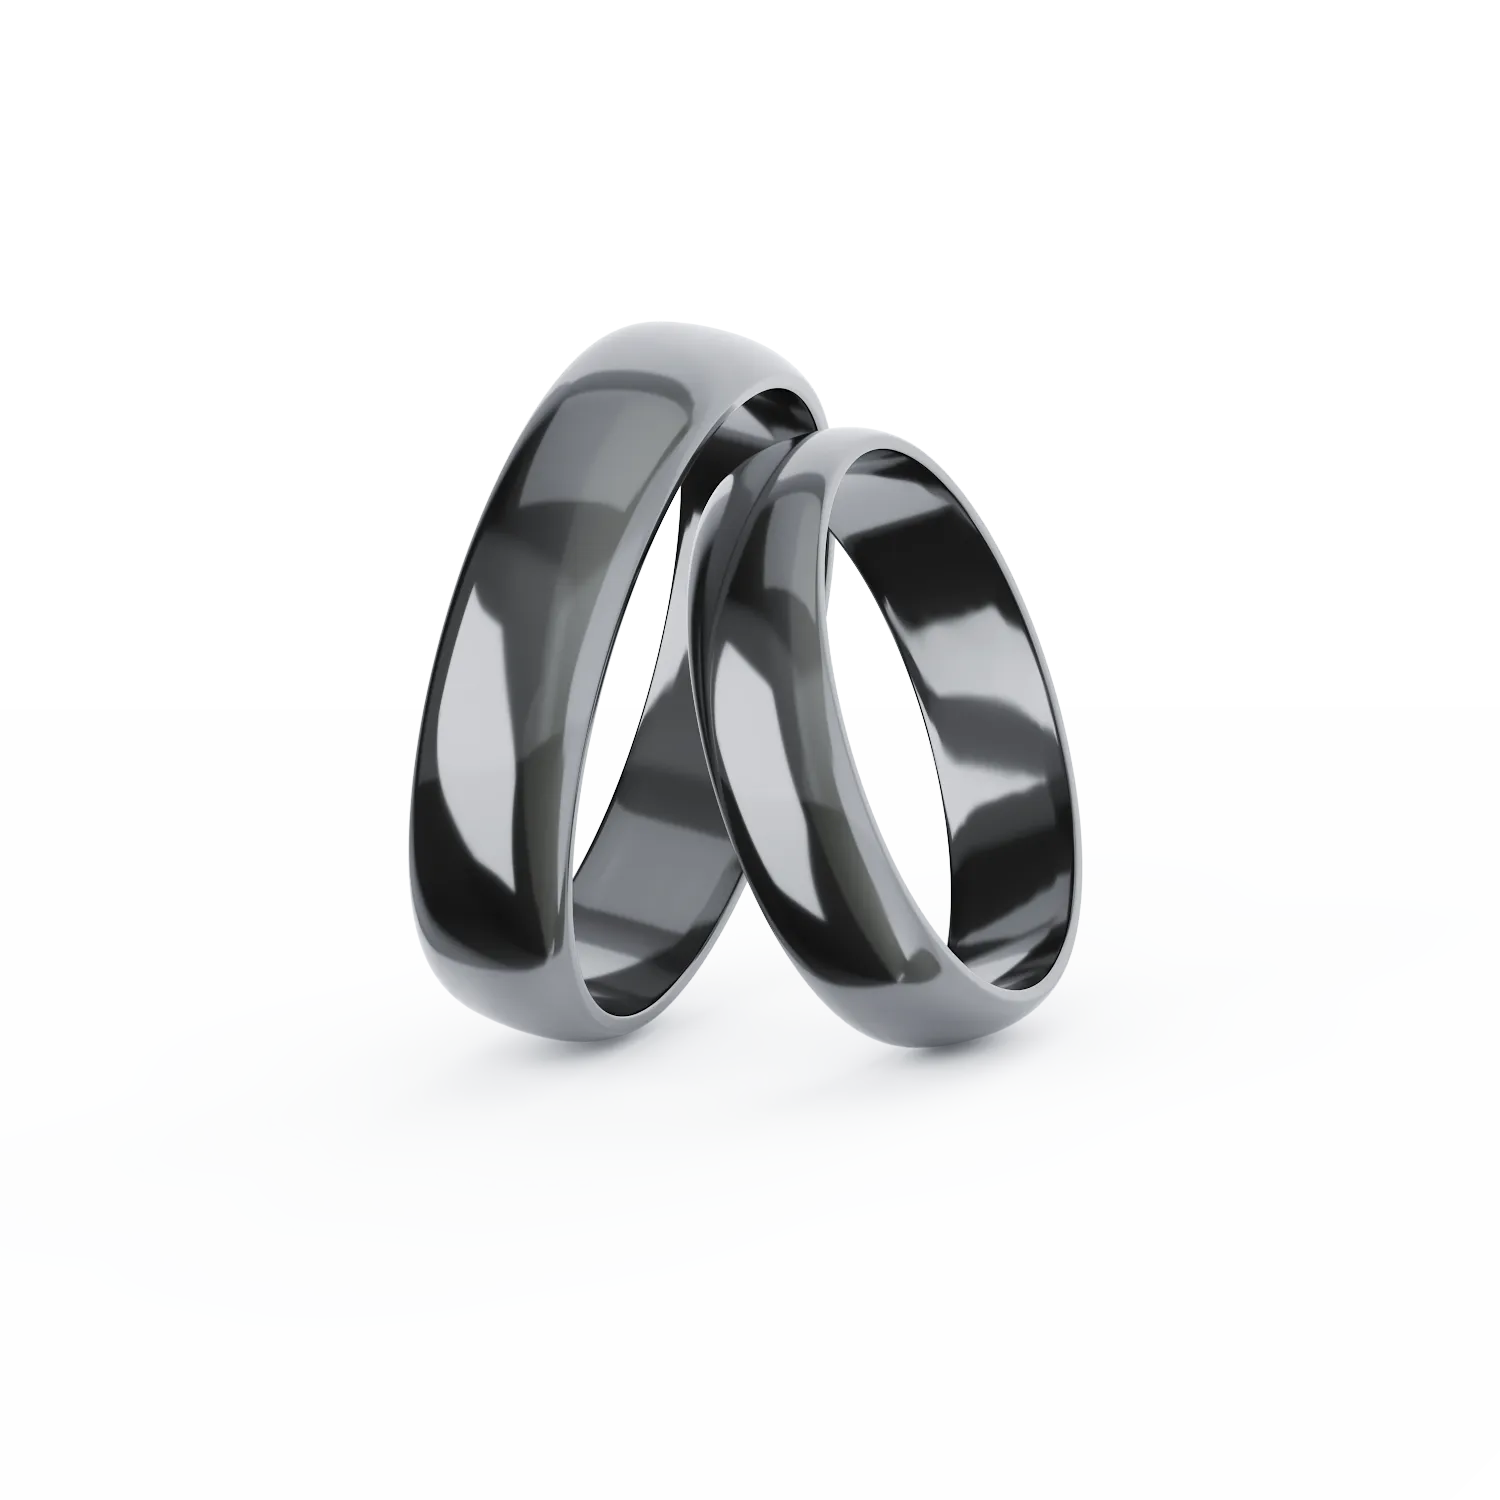 RADIANCE tantalum wedding rings